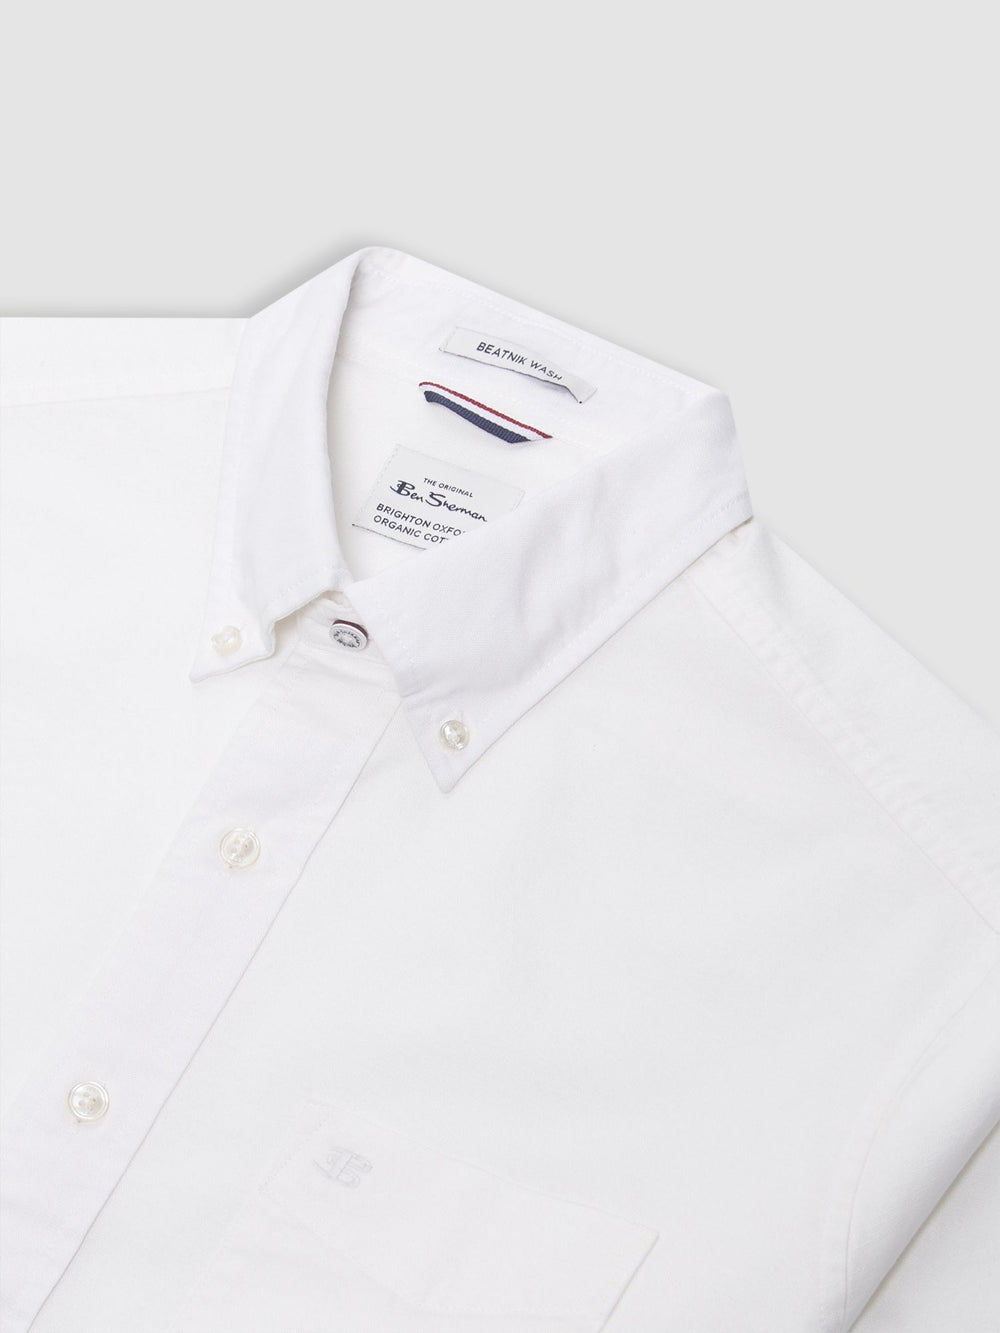 Brighton Oxford, Ben Sherman, button down, organic cotton, white oxford shirt - front